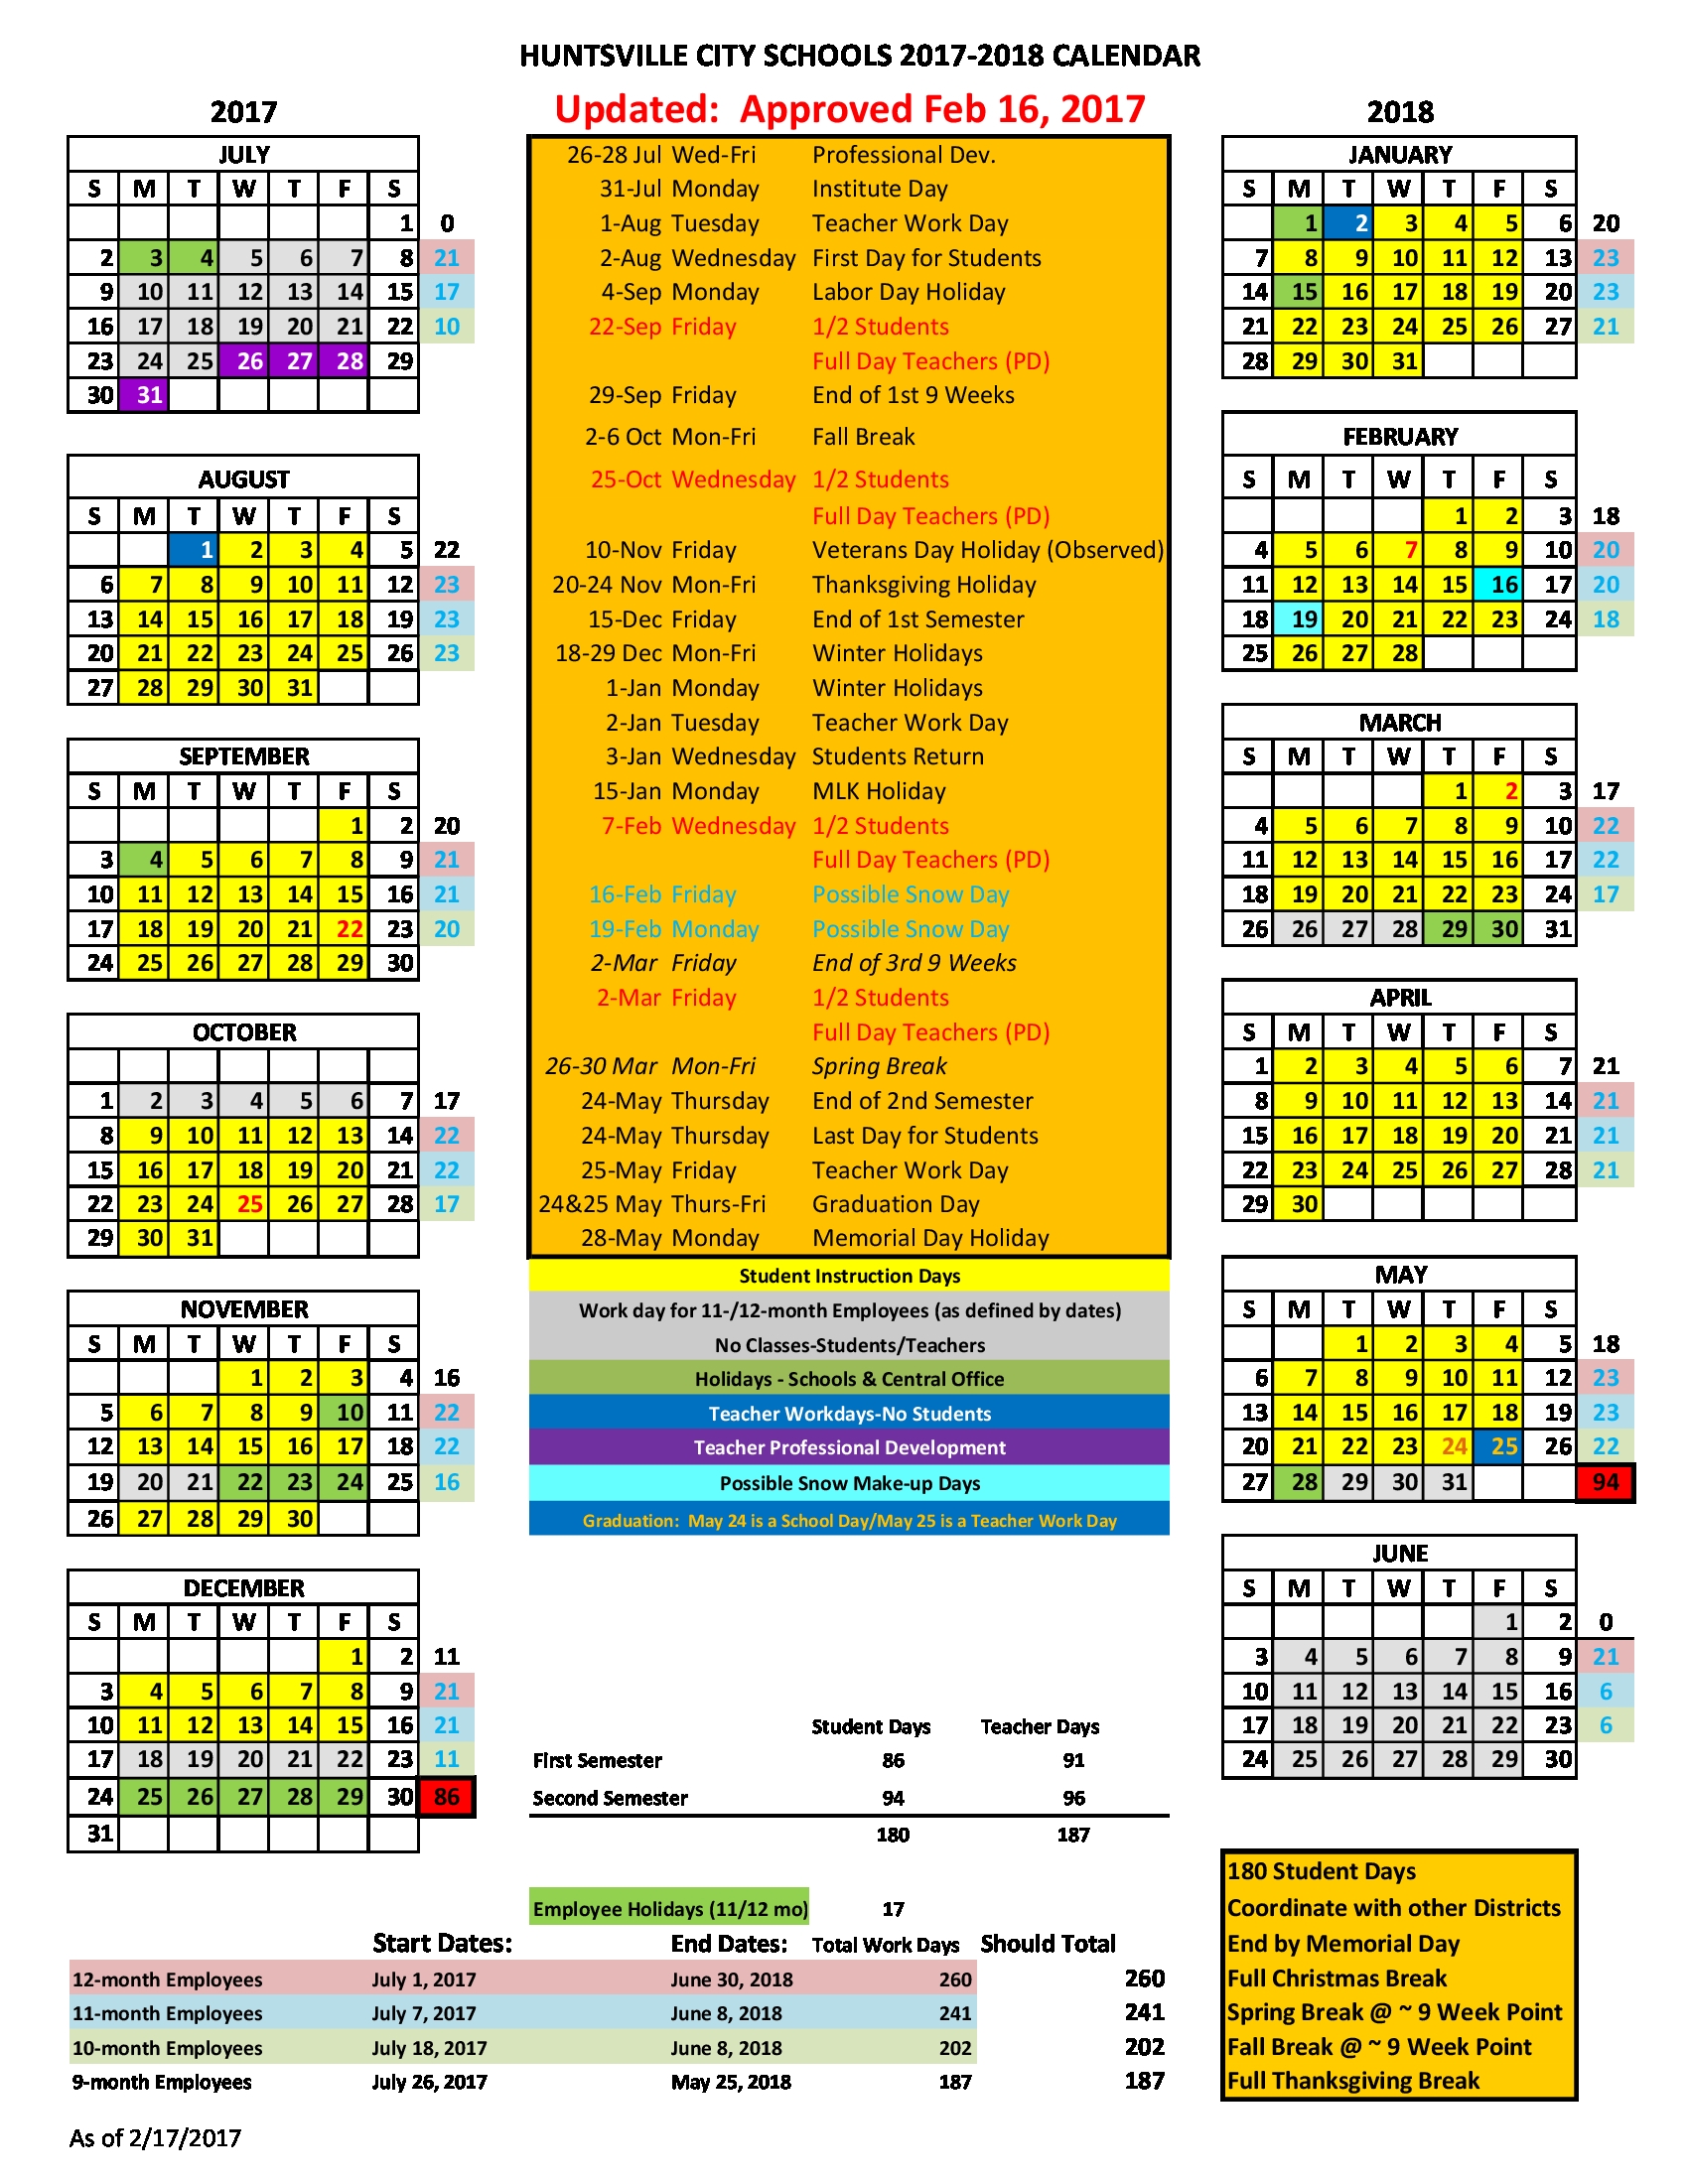 Huntsville City Schools Calendar 2017 2018 Bazga 1700 X 2200.